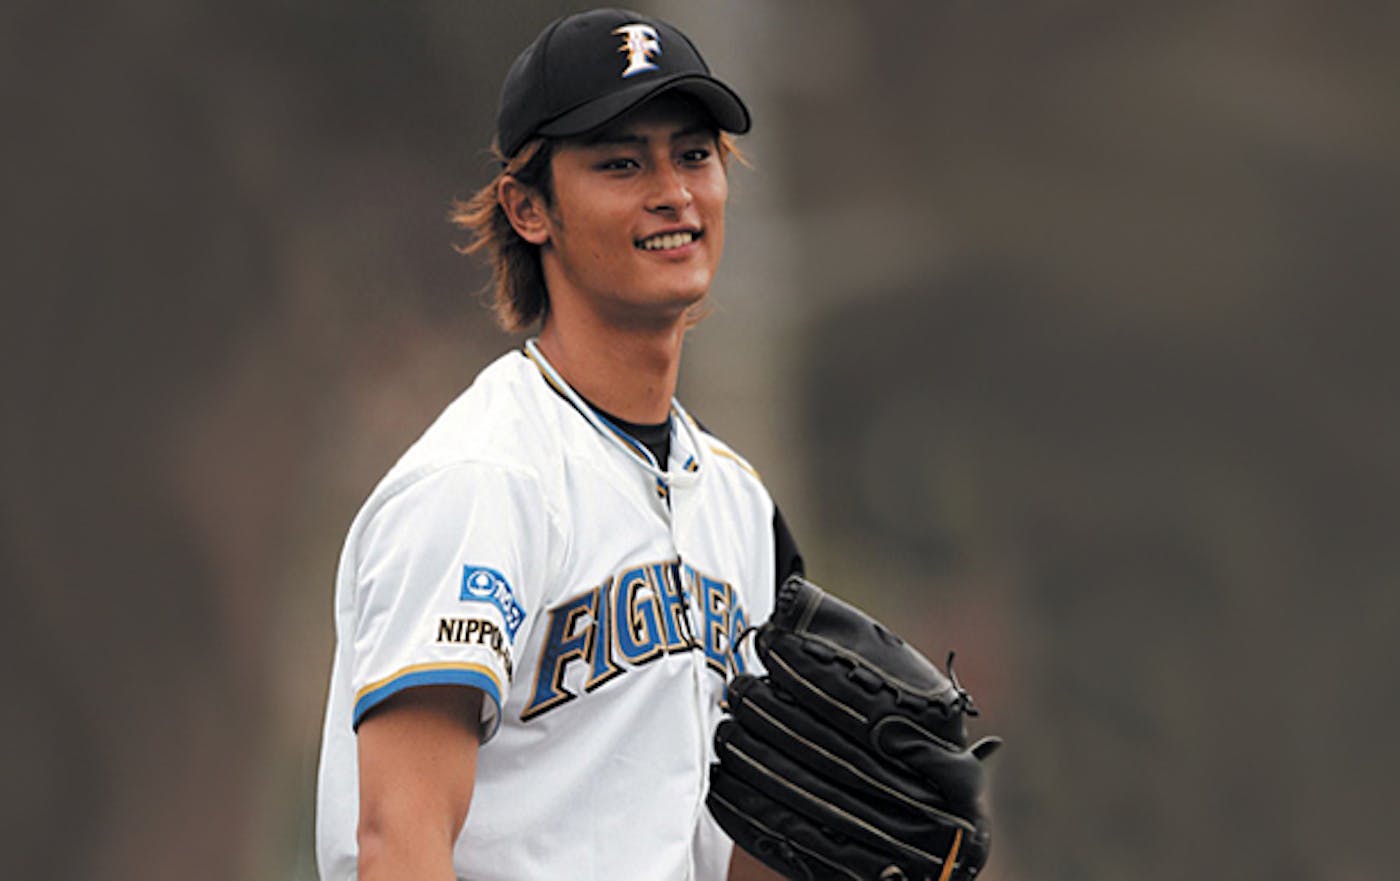 Japanese pitcher Darvish coming to MLB